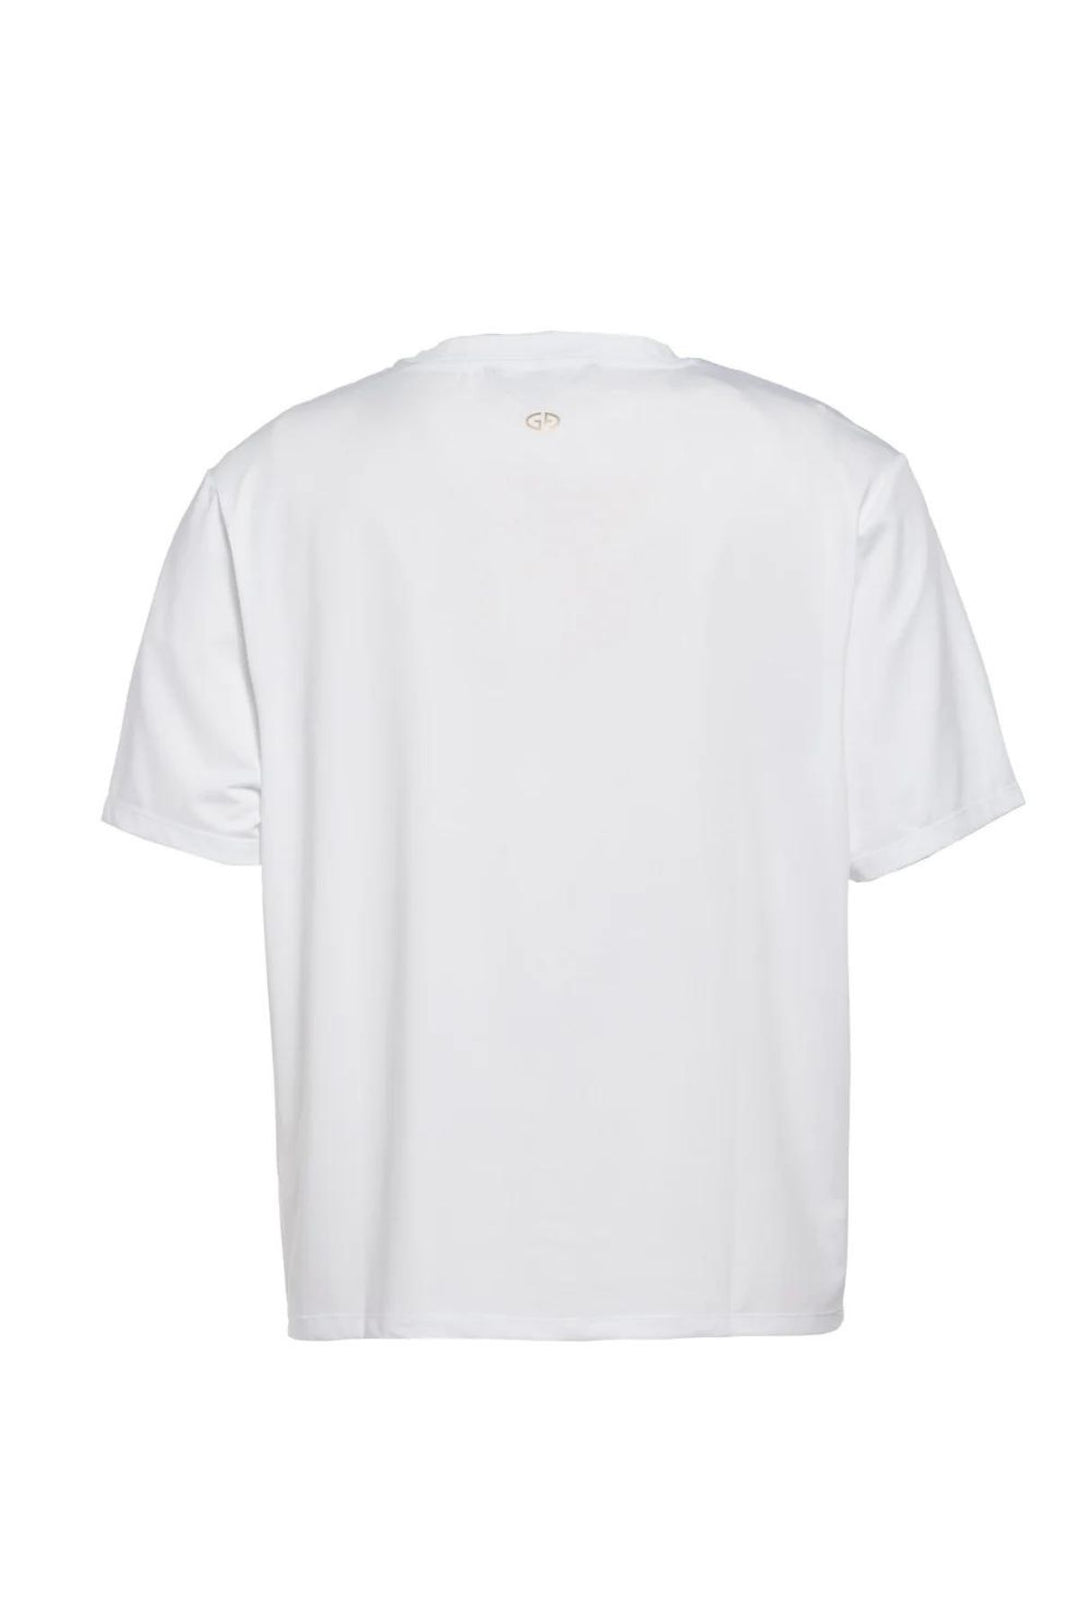 BOXY short sleeve top (White)